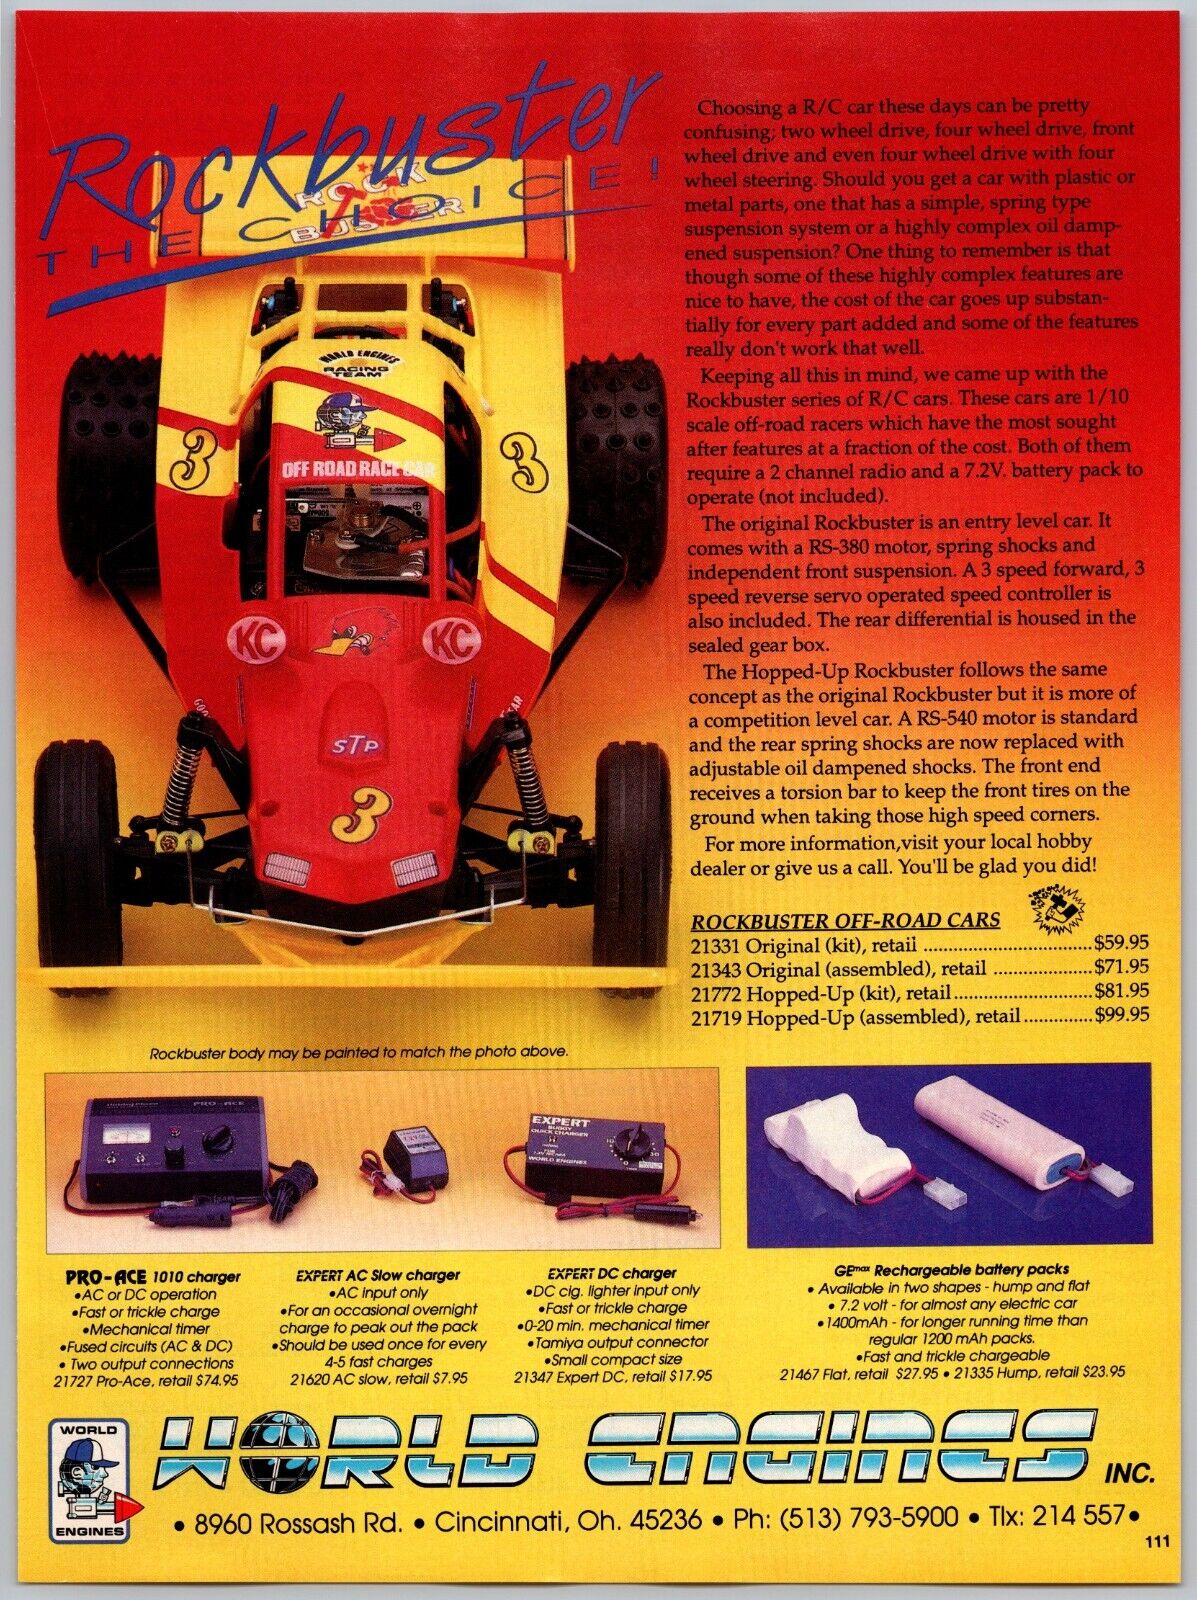 World Engines Inc. Rockbuster Model R/C Race Car Vtg Dec 1987 Full Page Print Ad